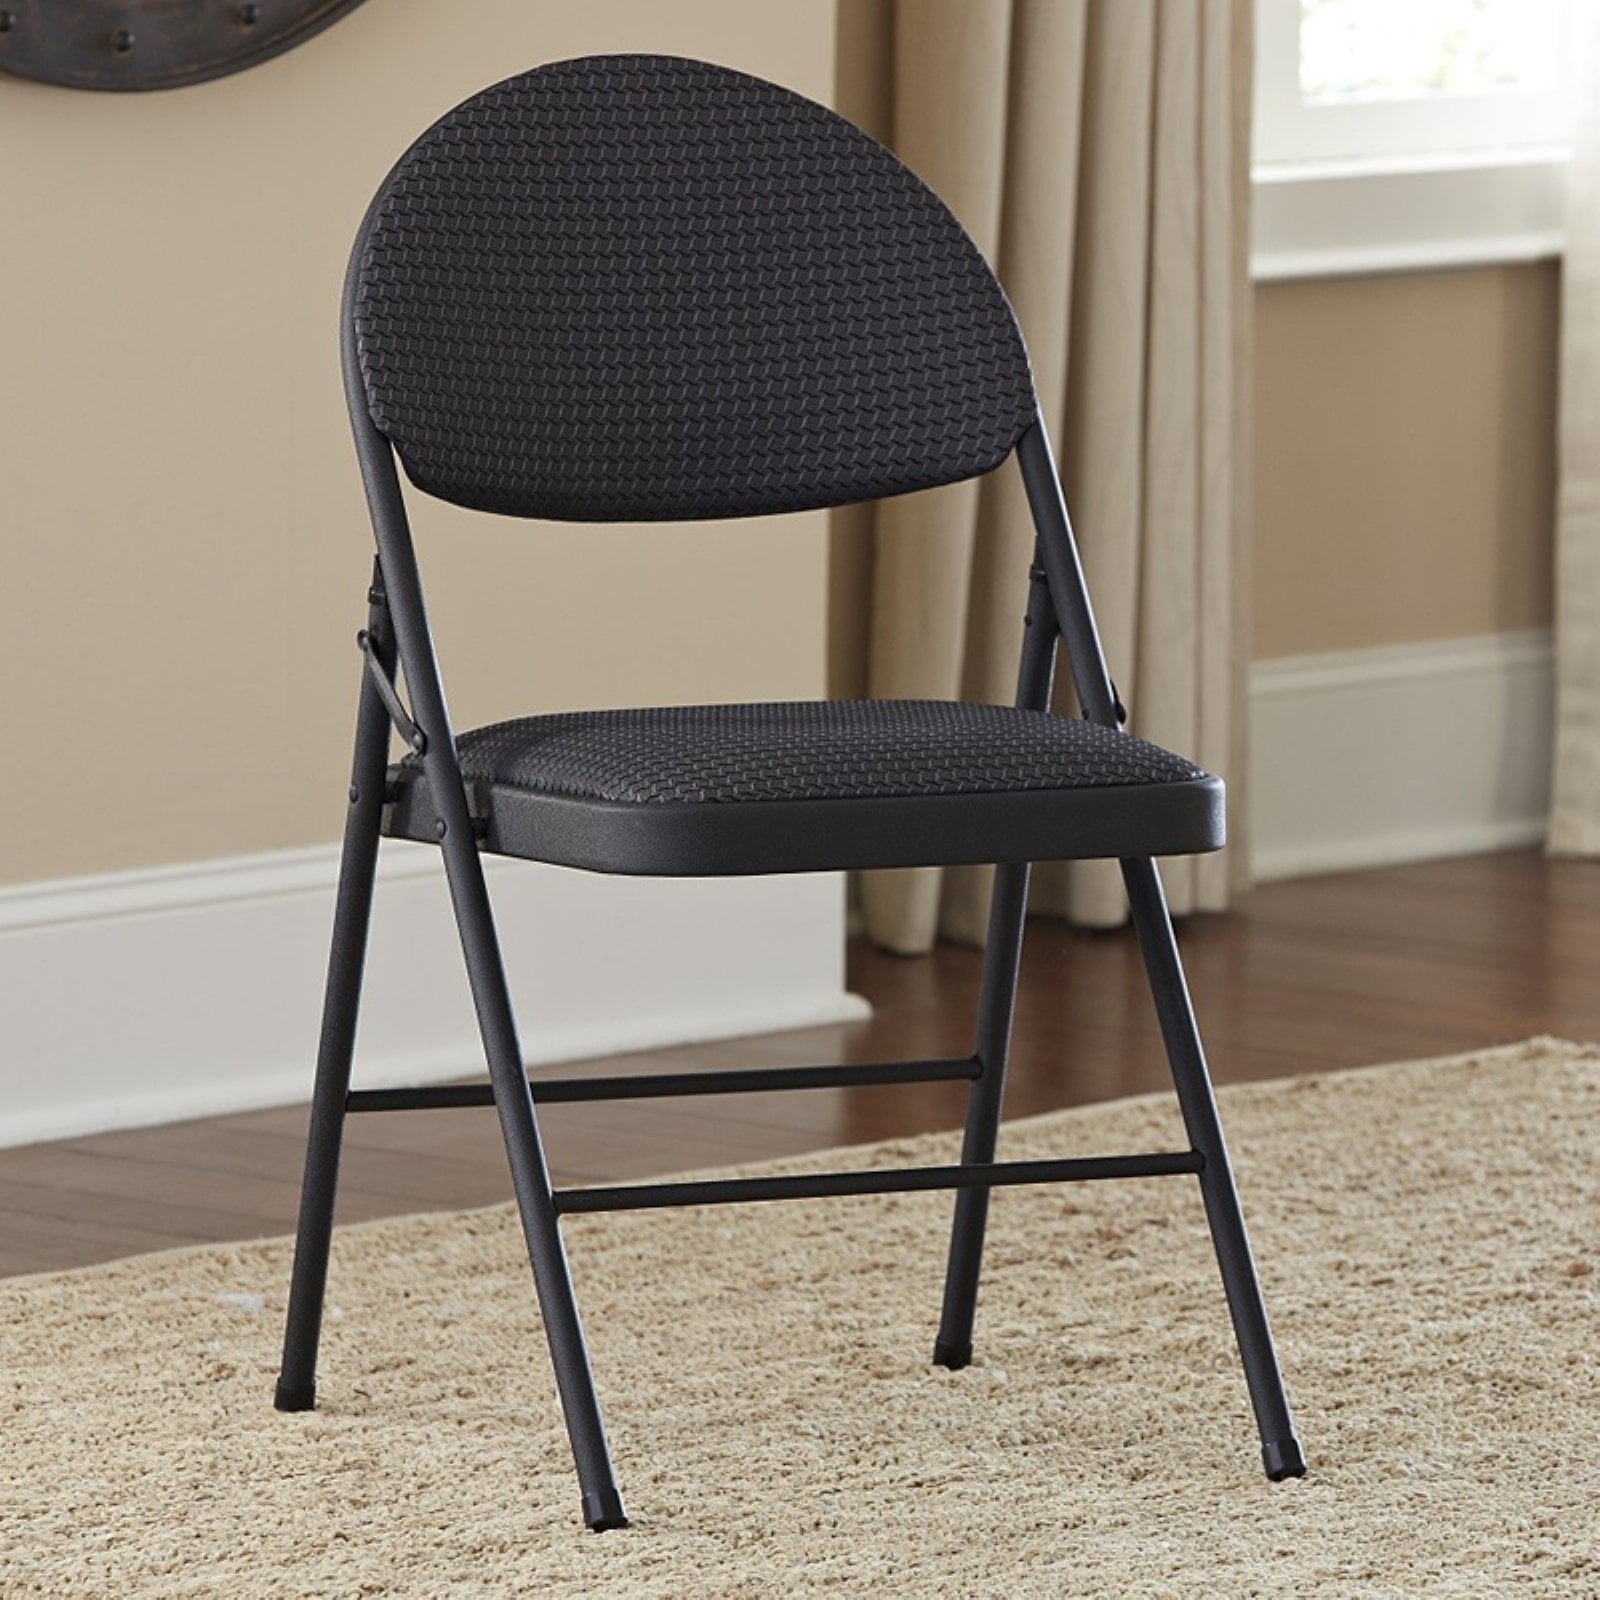 Cosco XL Comfort Folding Chairs - 4 Pack - Walmart.com